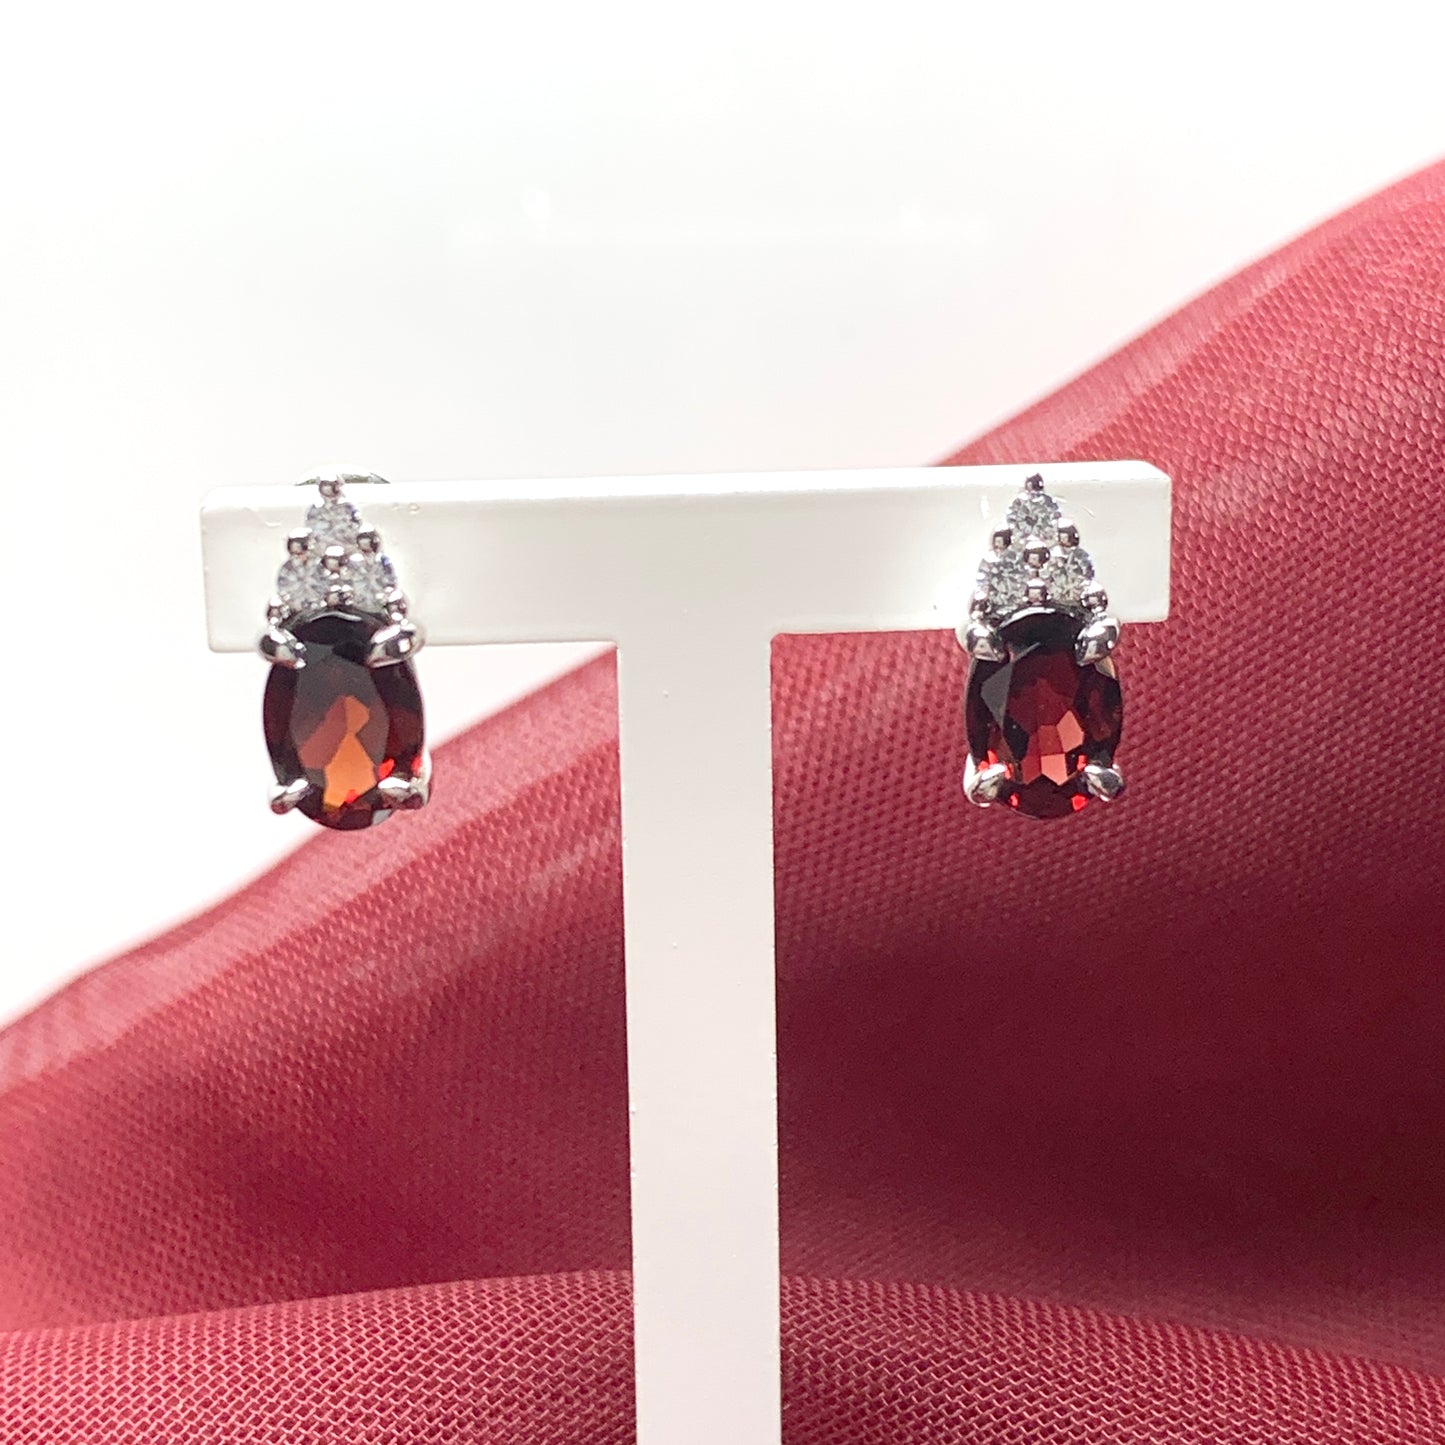 Garnet and cubic zirconia sterling silver oval earrings